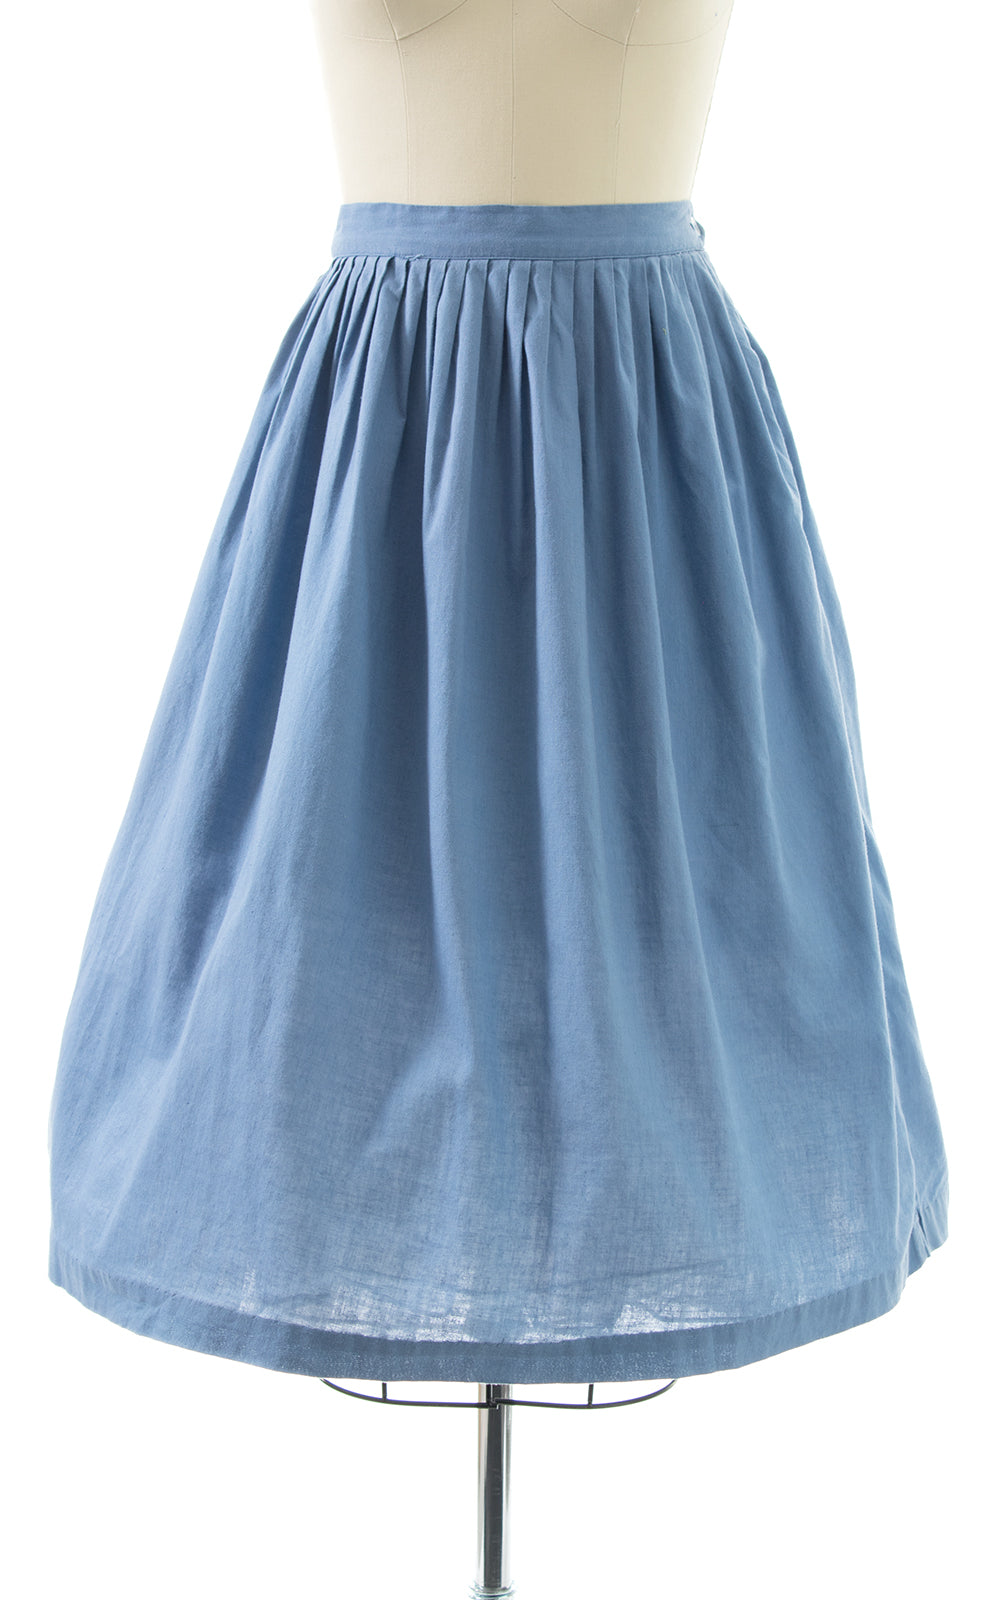 1950s Periwinkle Blue Cotton Skirt